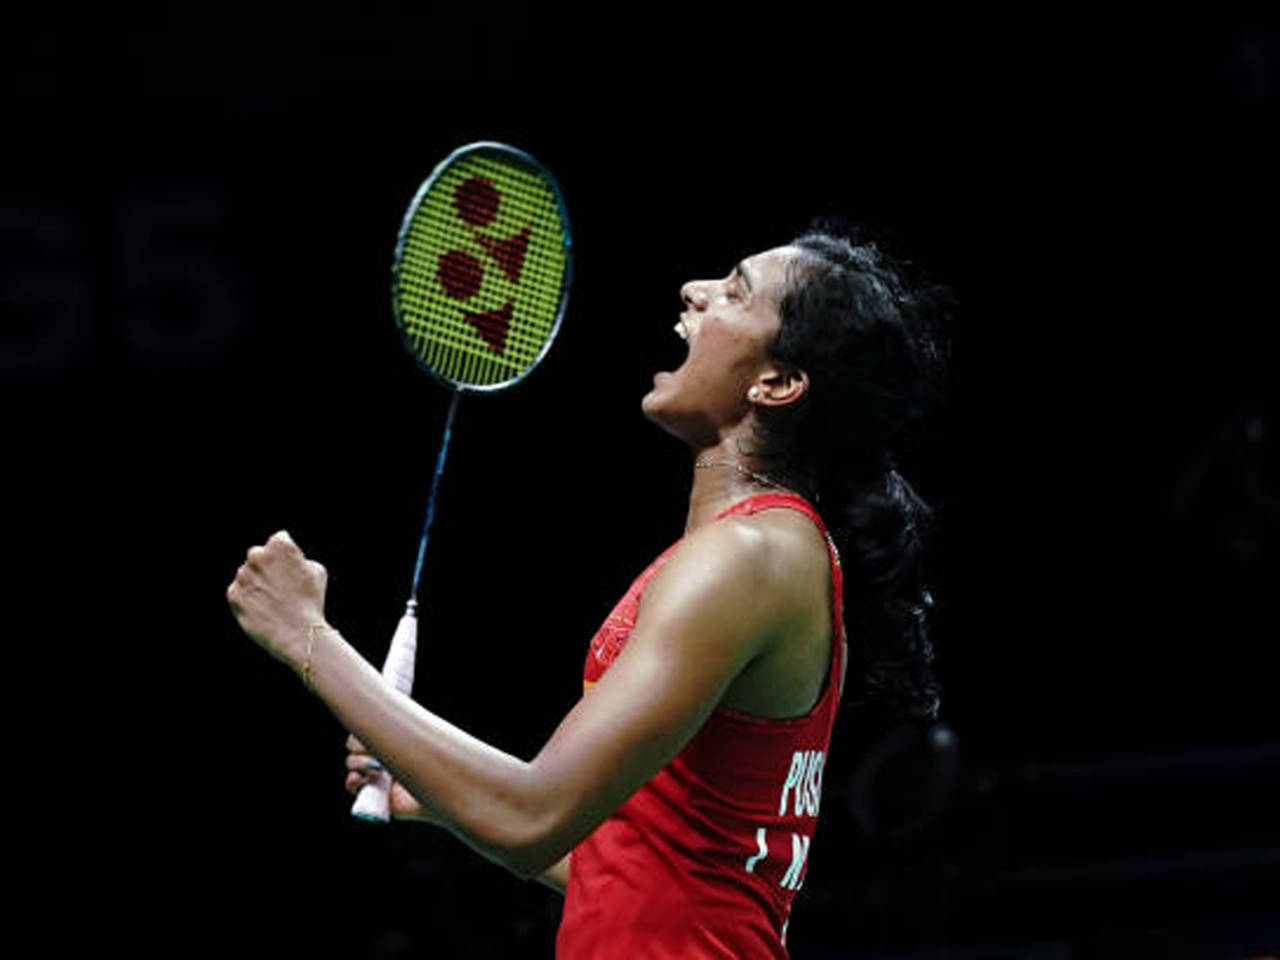 PV Sindhu survives scare, Praneeth cruises to reach Japan Open quarterfinals Badminton News